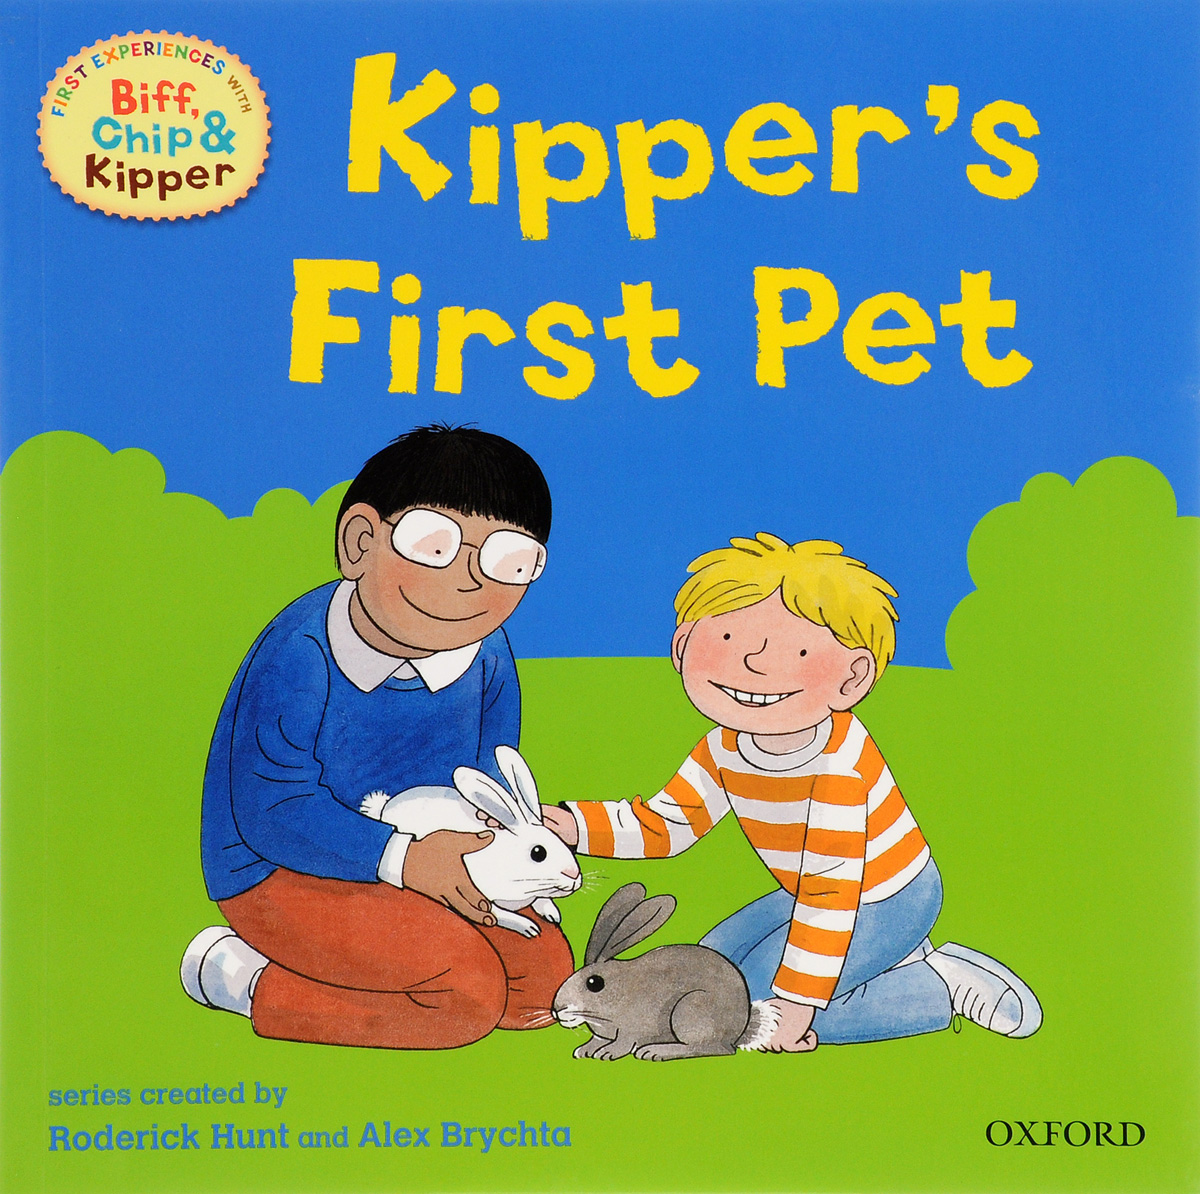 Biff Chip and Kipper. Pet reading. Pet book. Kippers. Pet reading 5